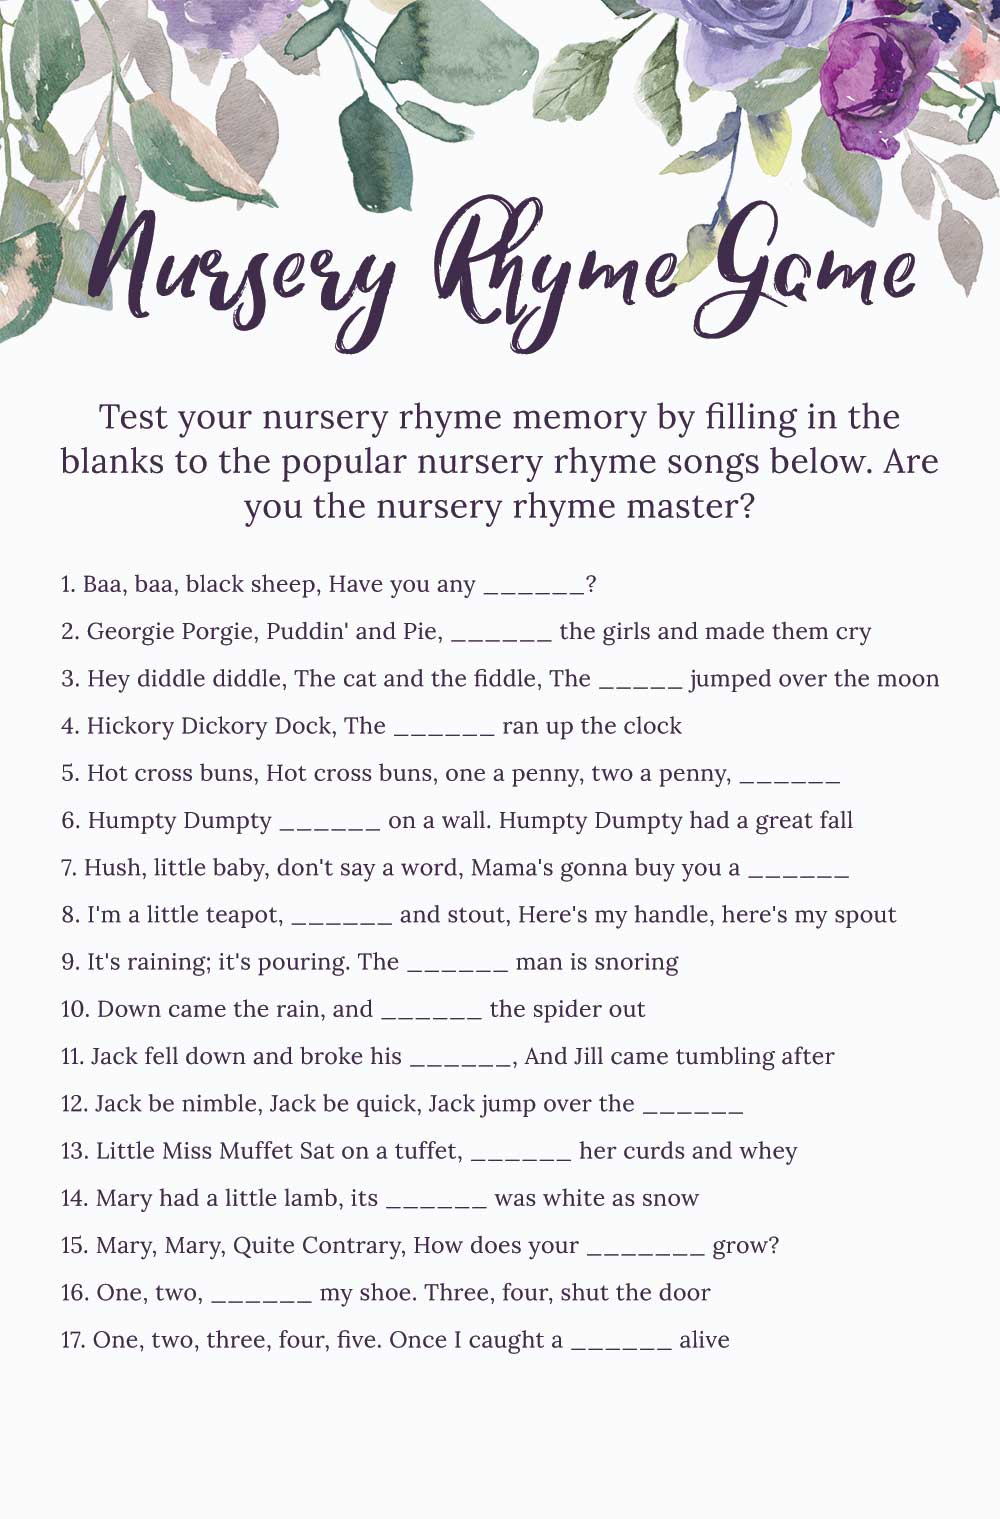 Nursery rhyme game - Plum Theme